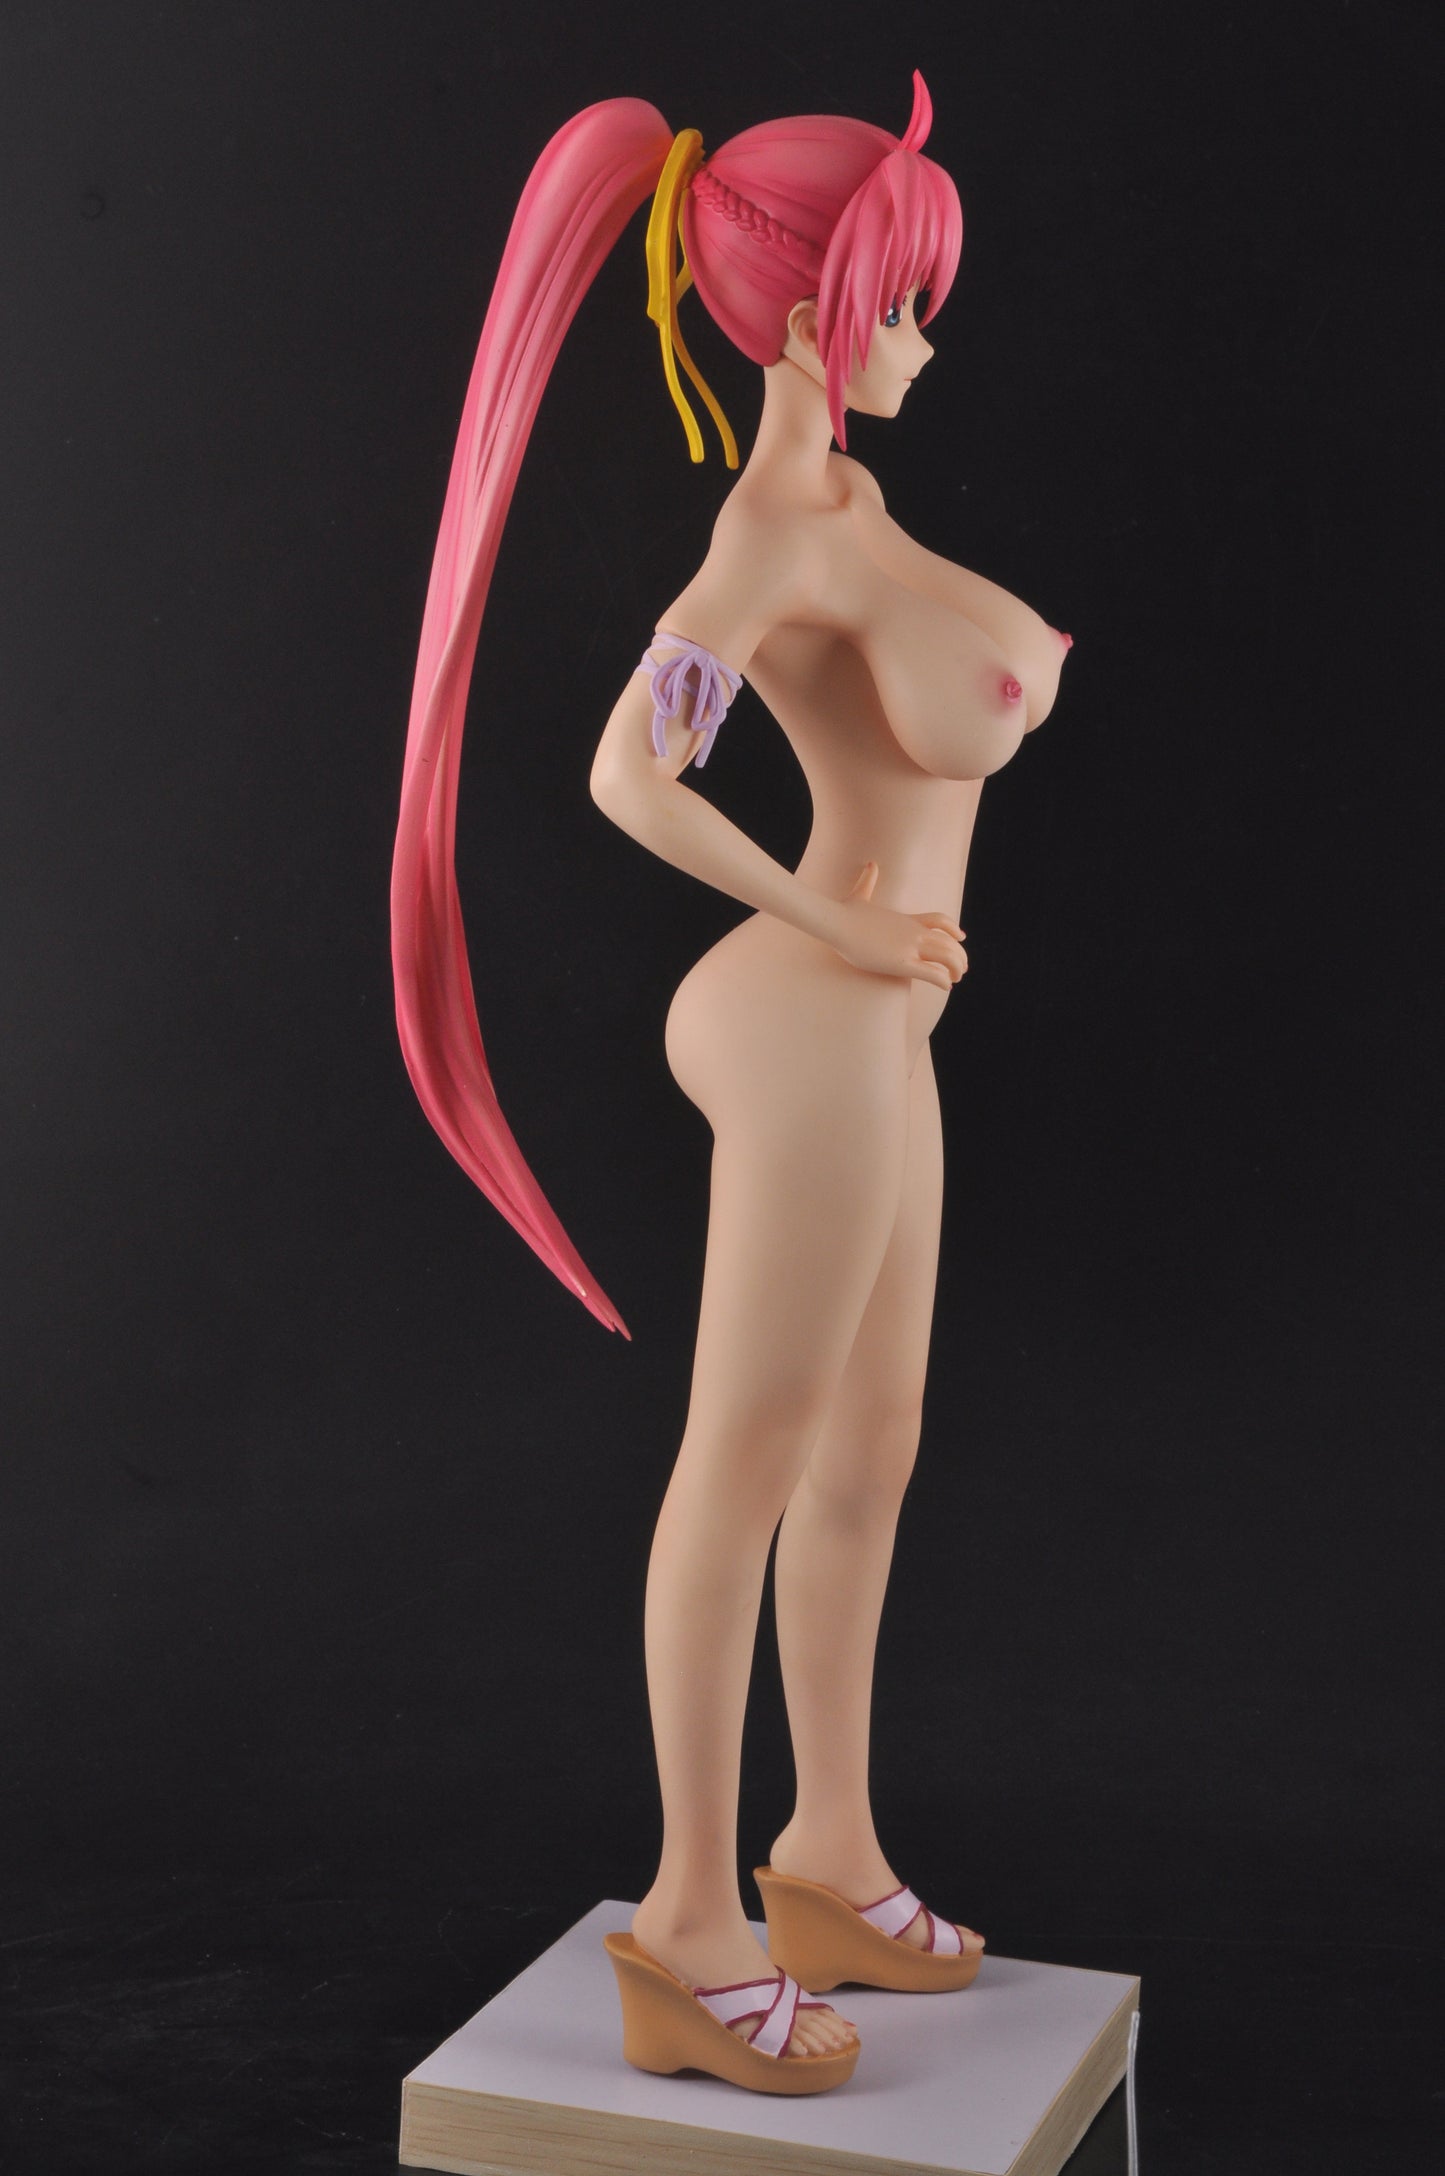 Japanese anime Magical Girl Lyrical Nanoha StrikerS Signum Ver. 2 nude anime figure